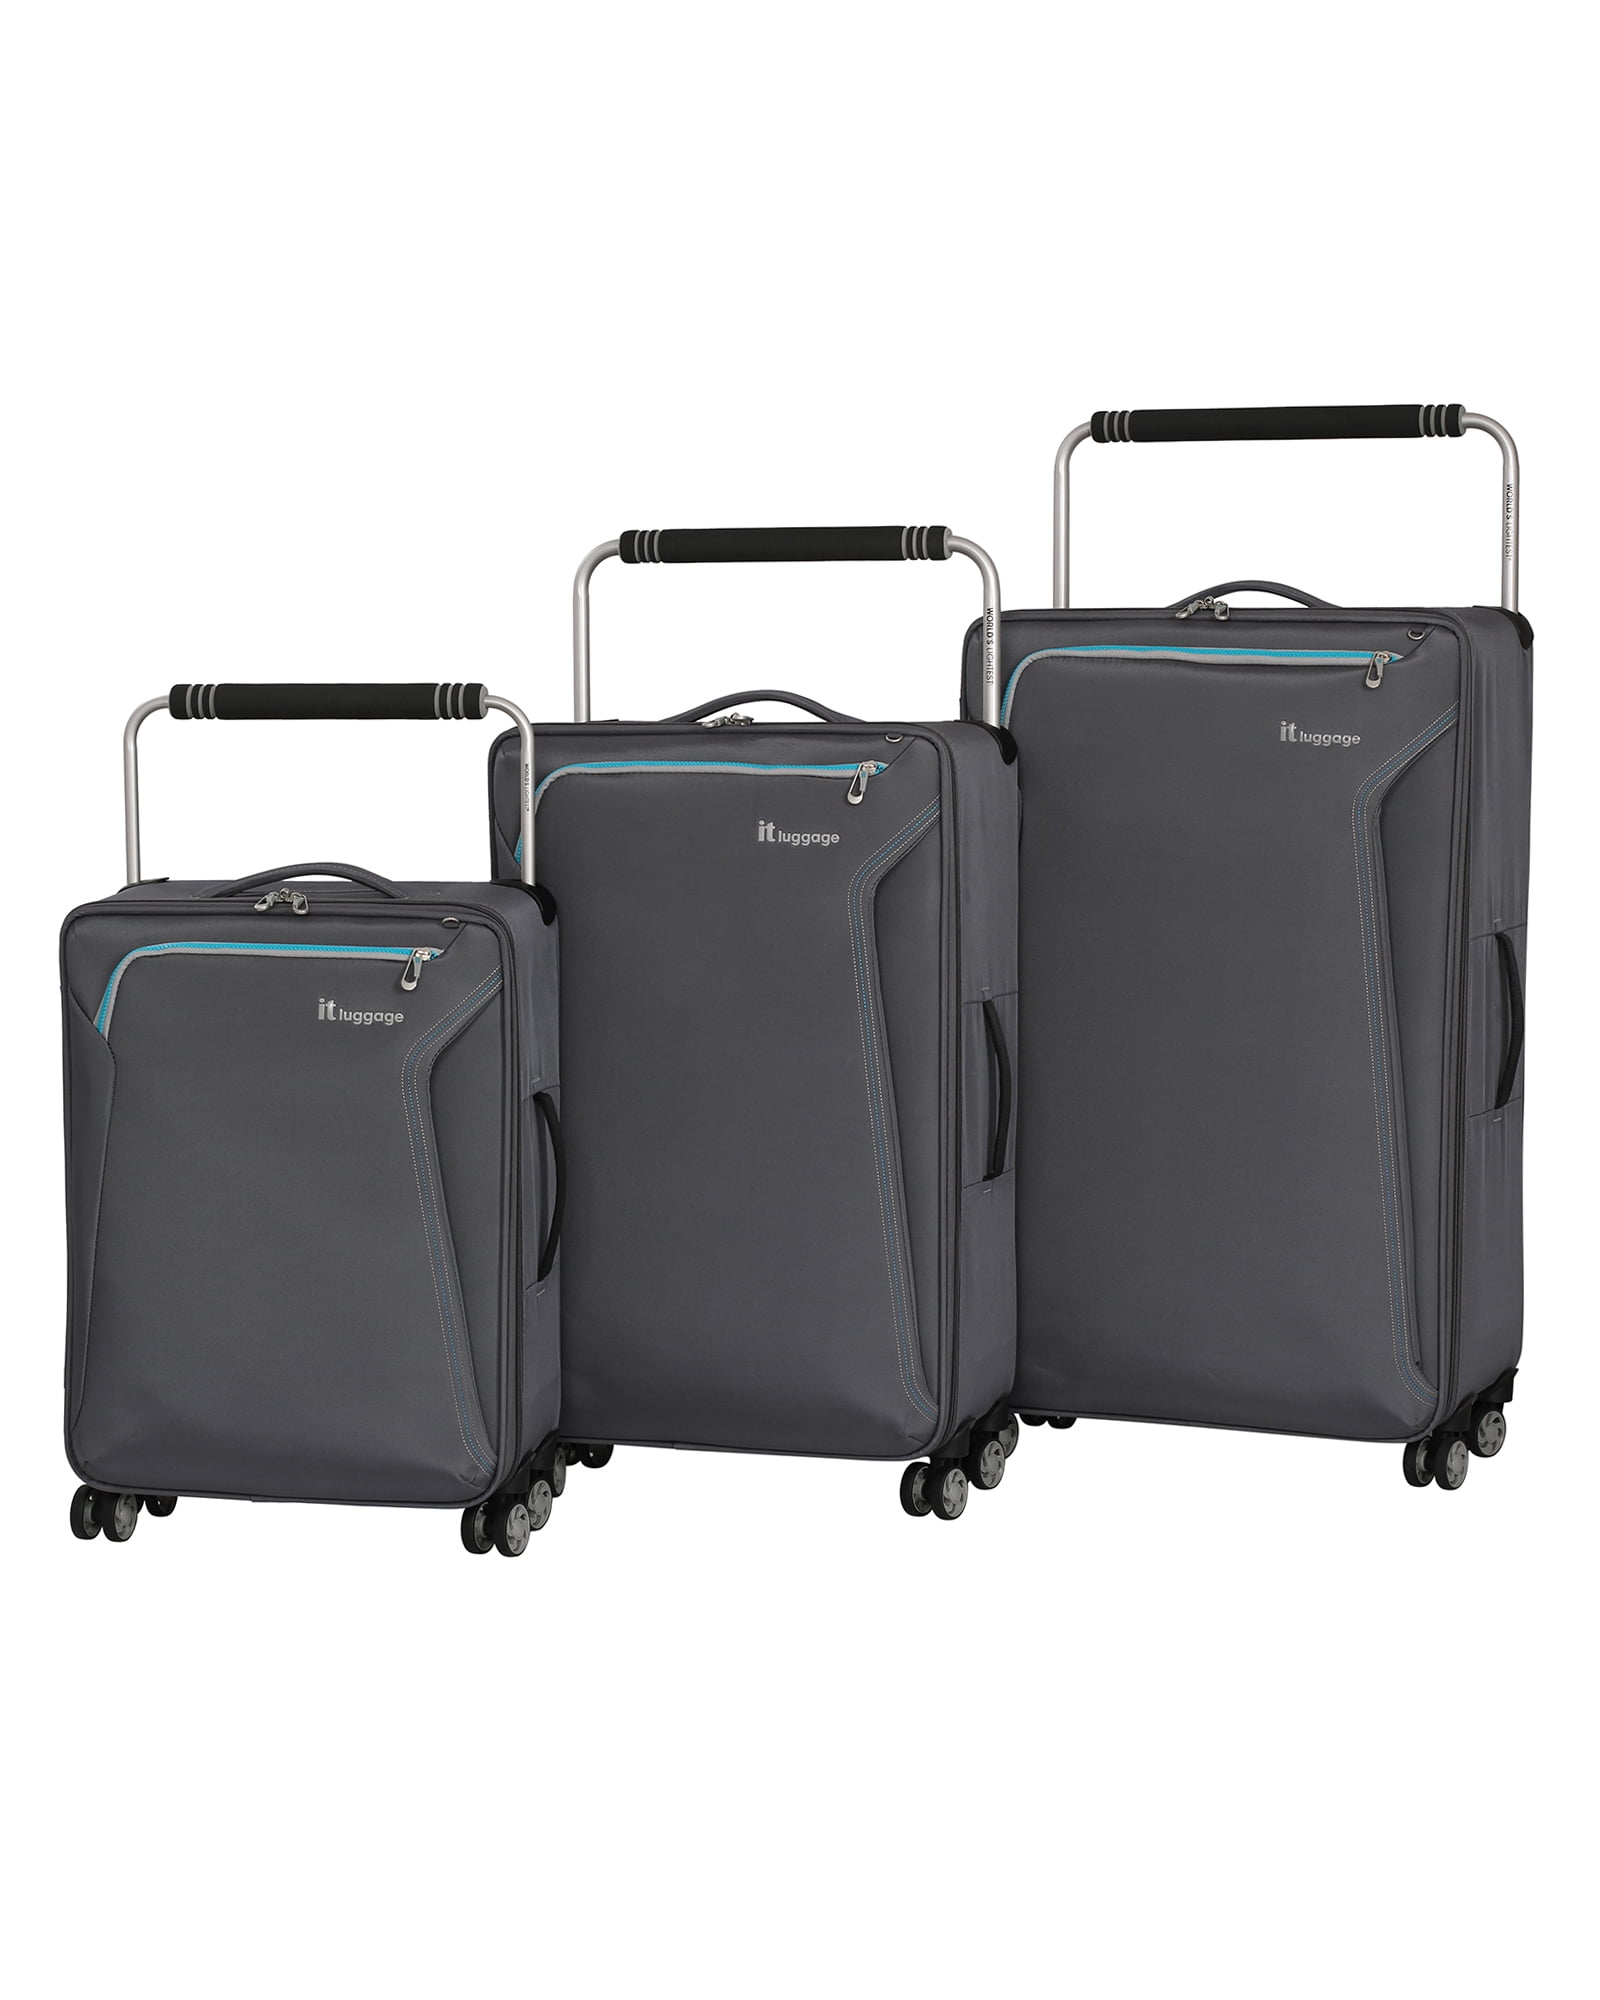 72 cm it luggage World's Lightest Accent 8 Wheel Super Lightweight Suitcase Medium Valise 